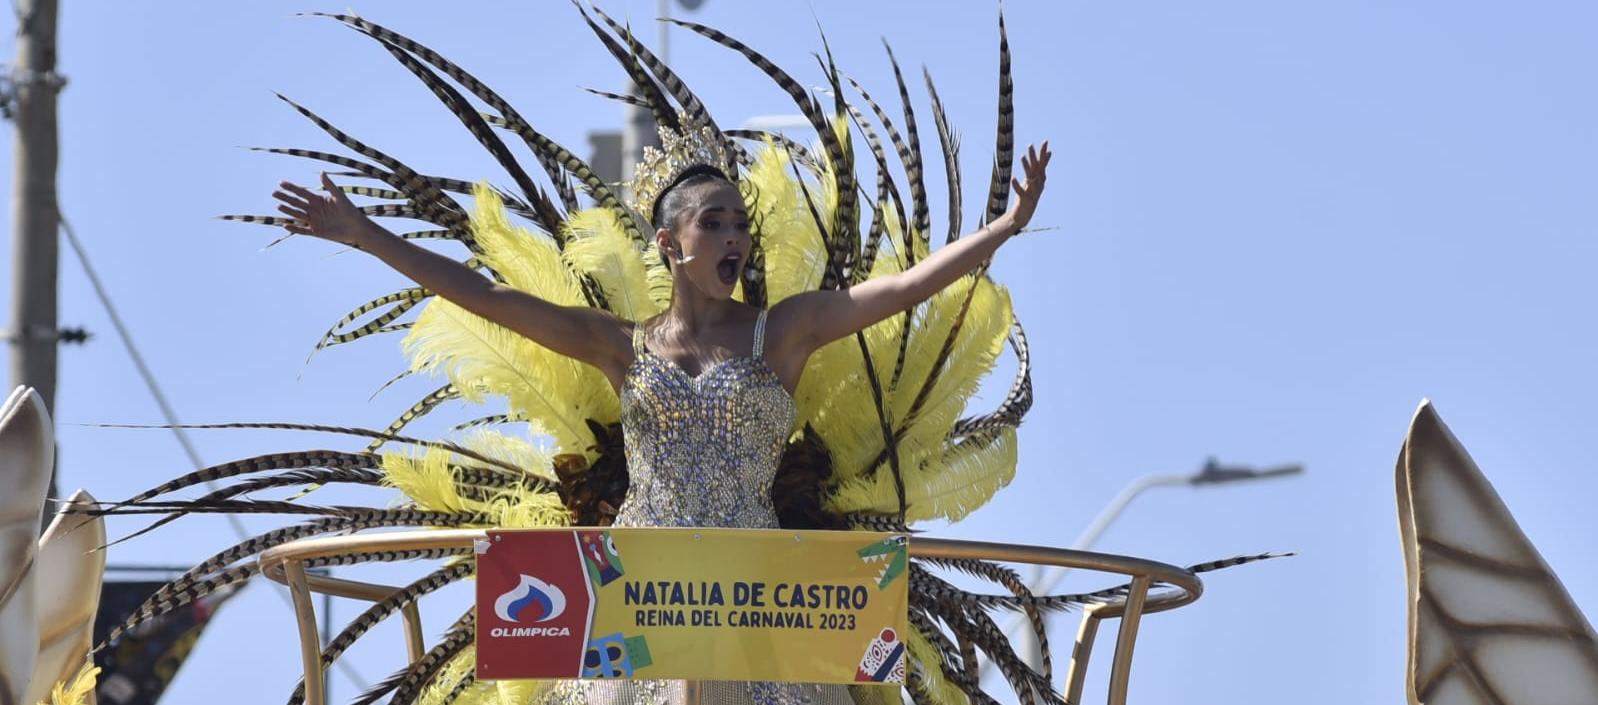 La Reina del Carnaval 2023, Natalia De Castro.